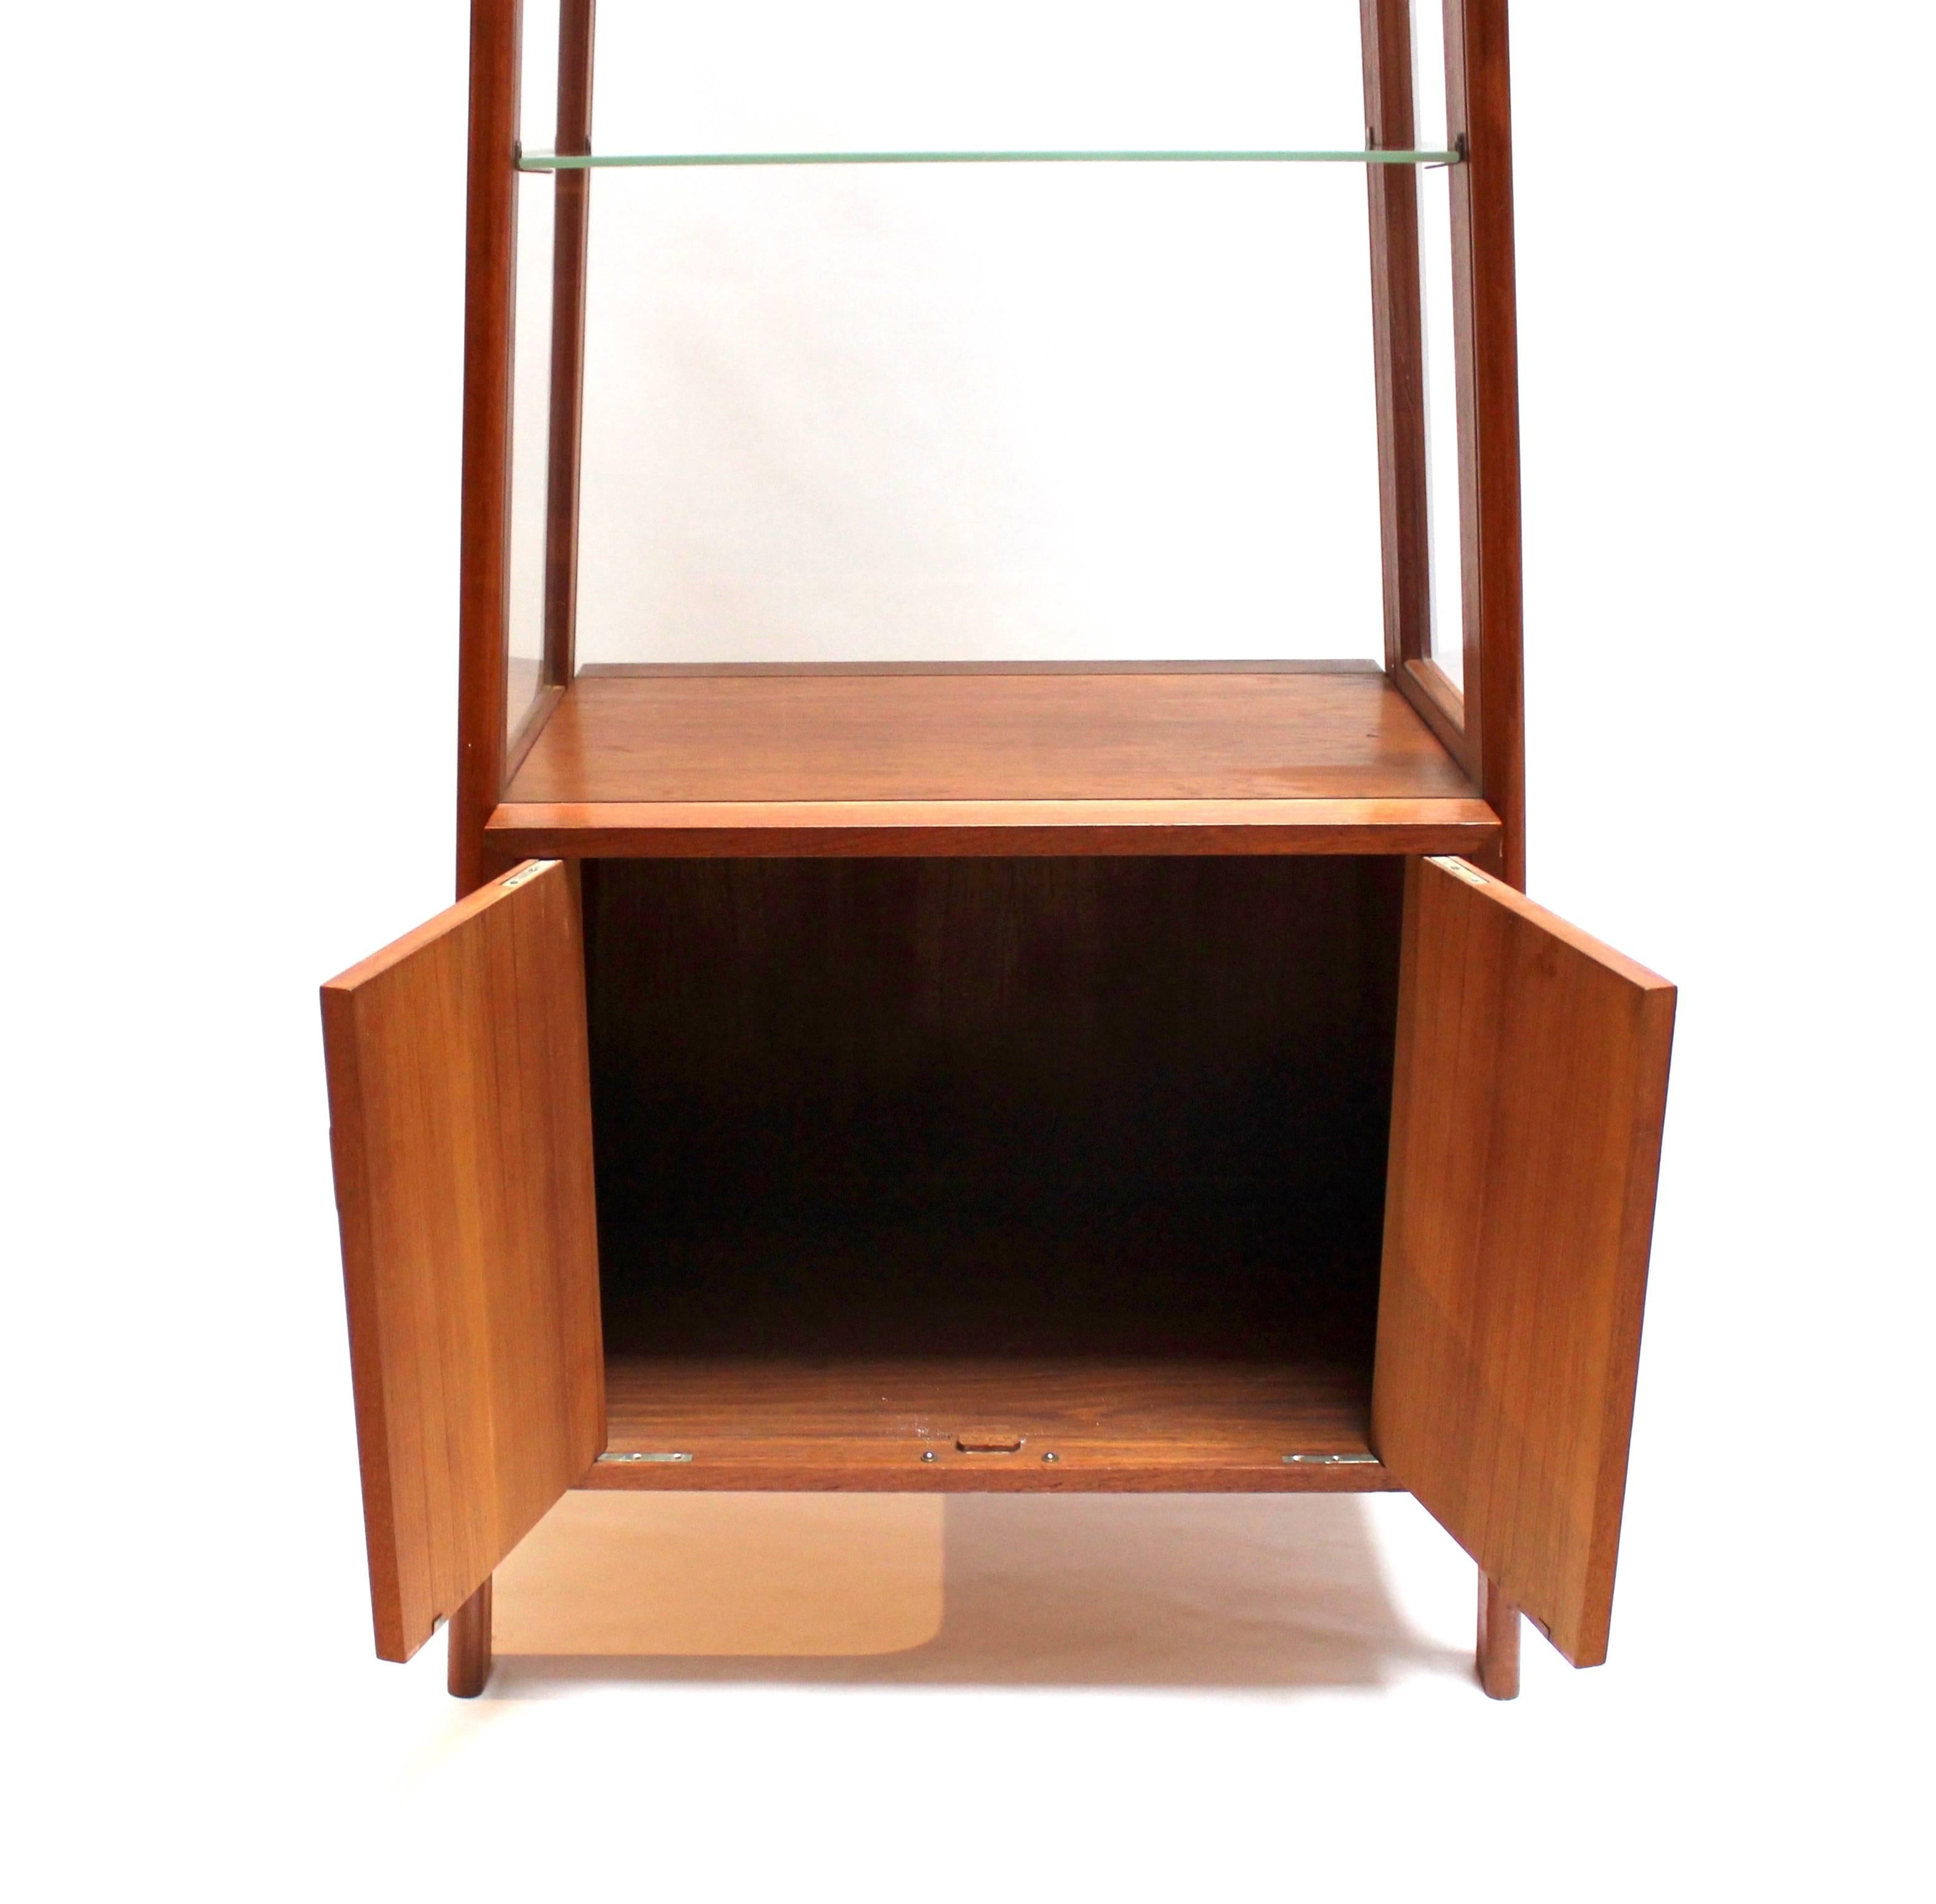 Rare 1950s Danish Modern Teak and Glass Curio Cabinet or Vitrine by Hans Wegner 1